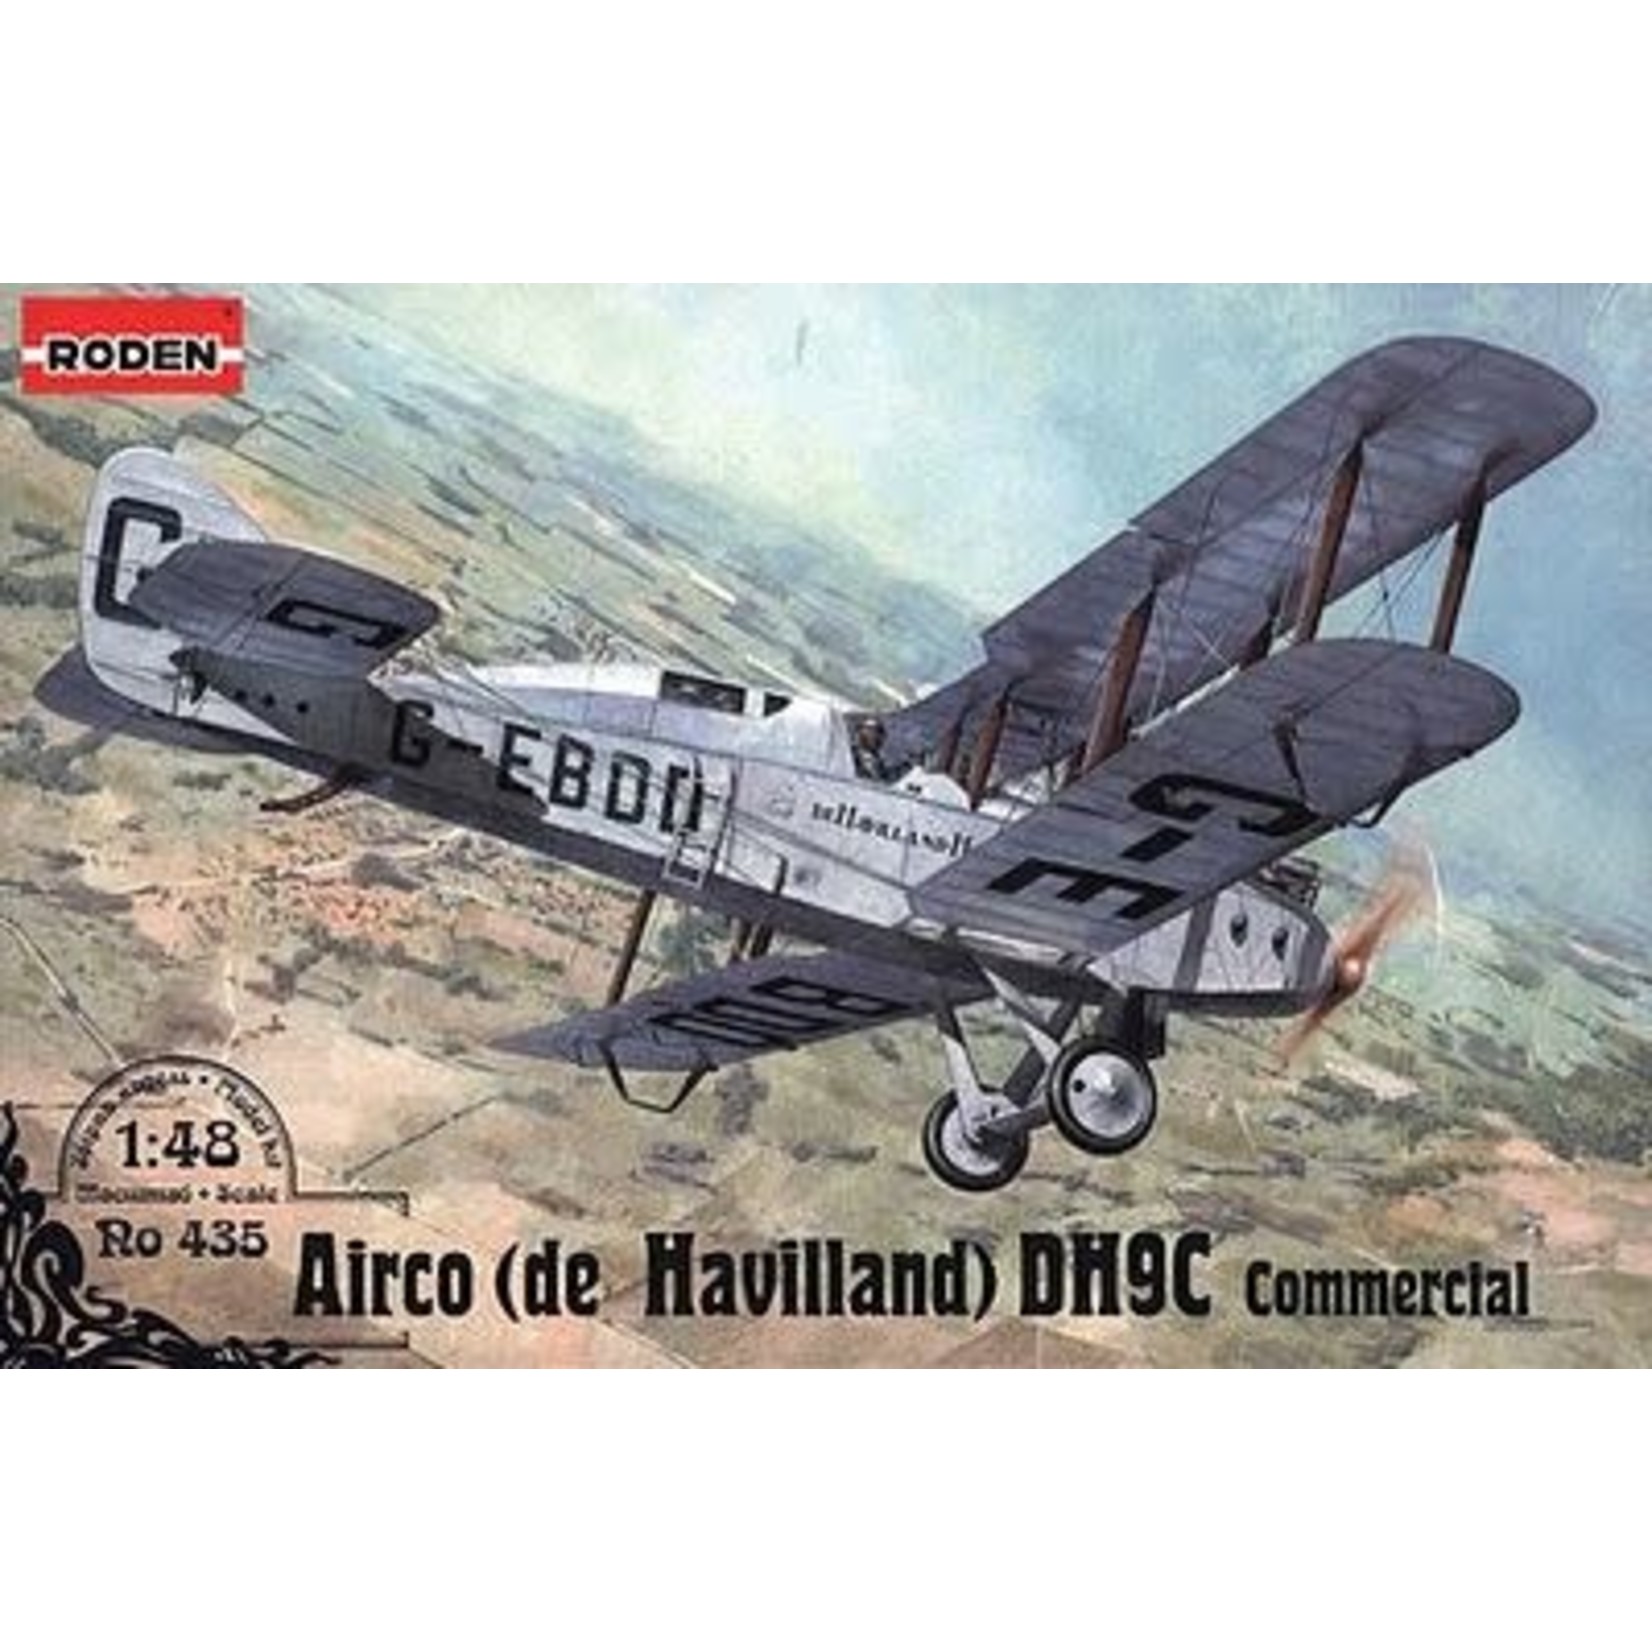 **0435: De Havilland D.H.9C